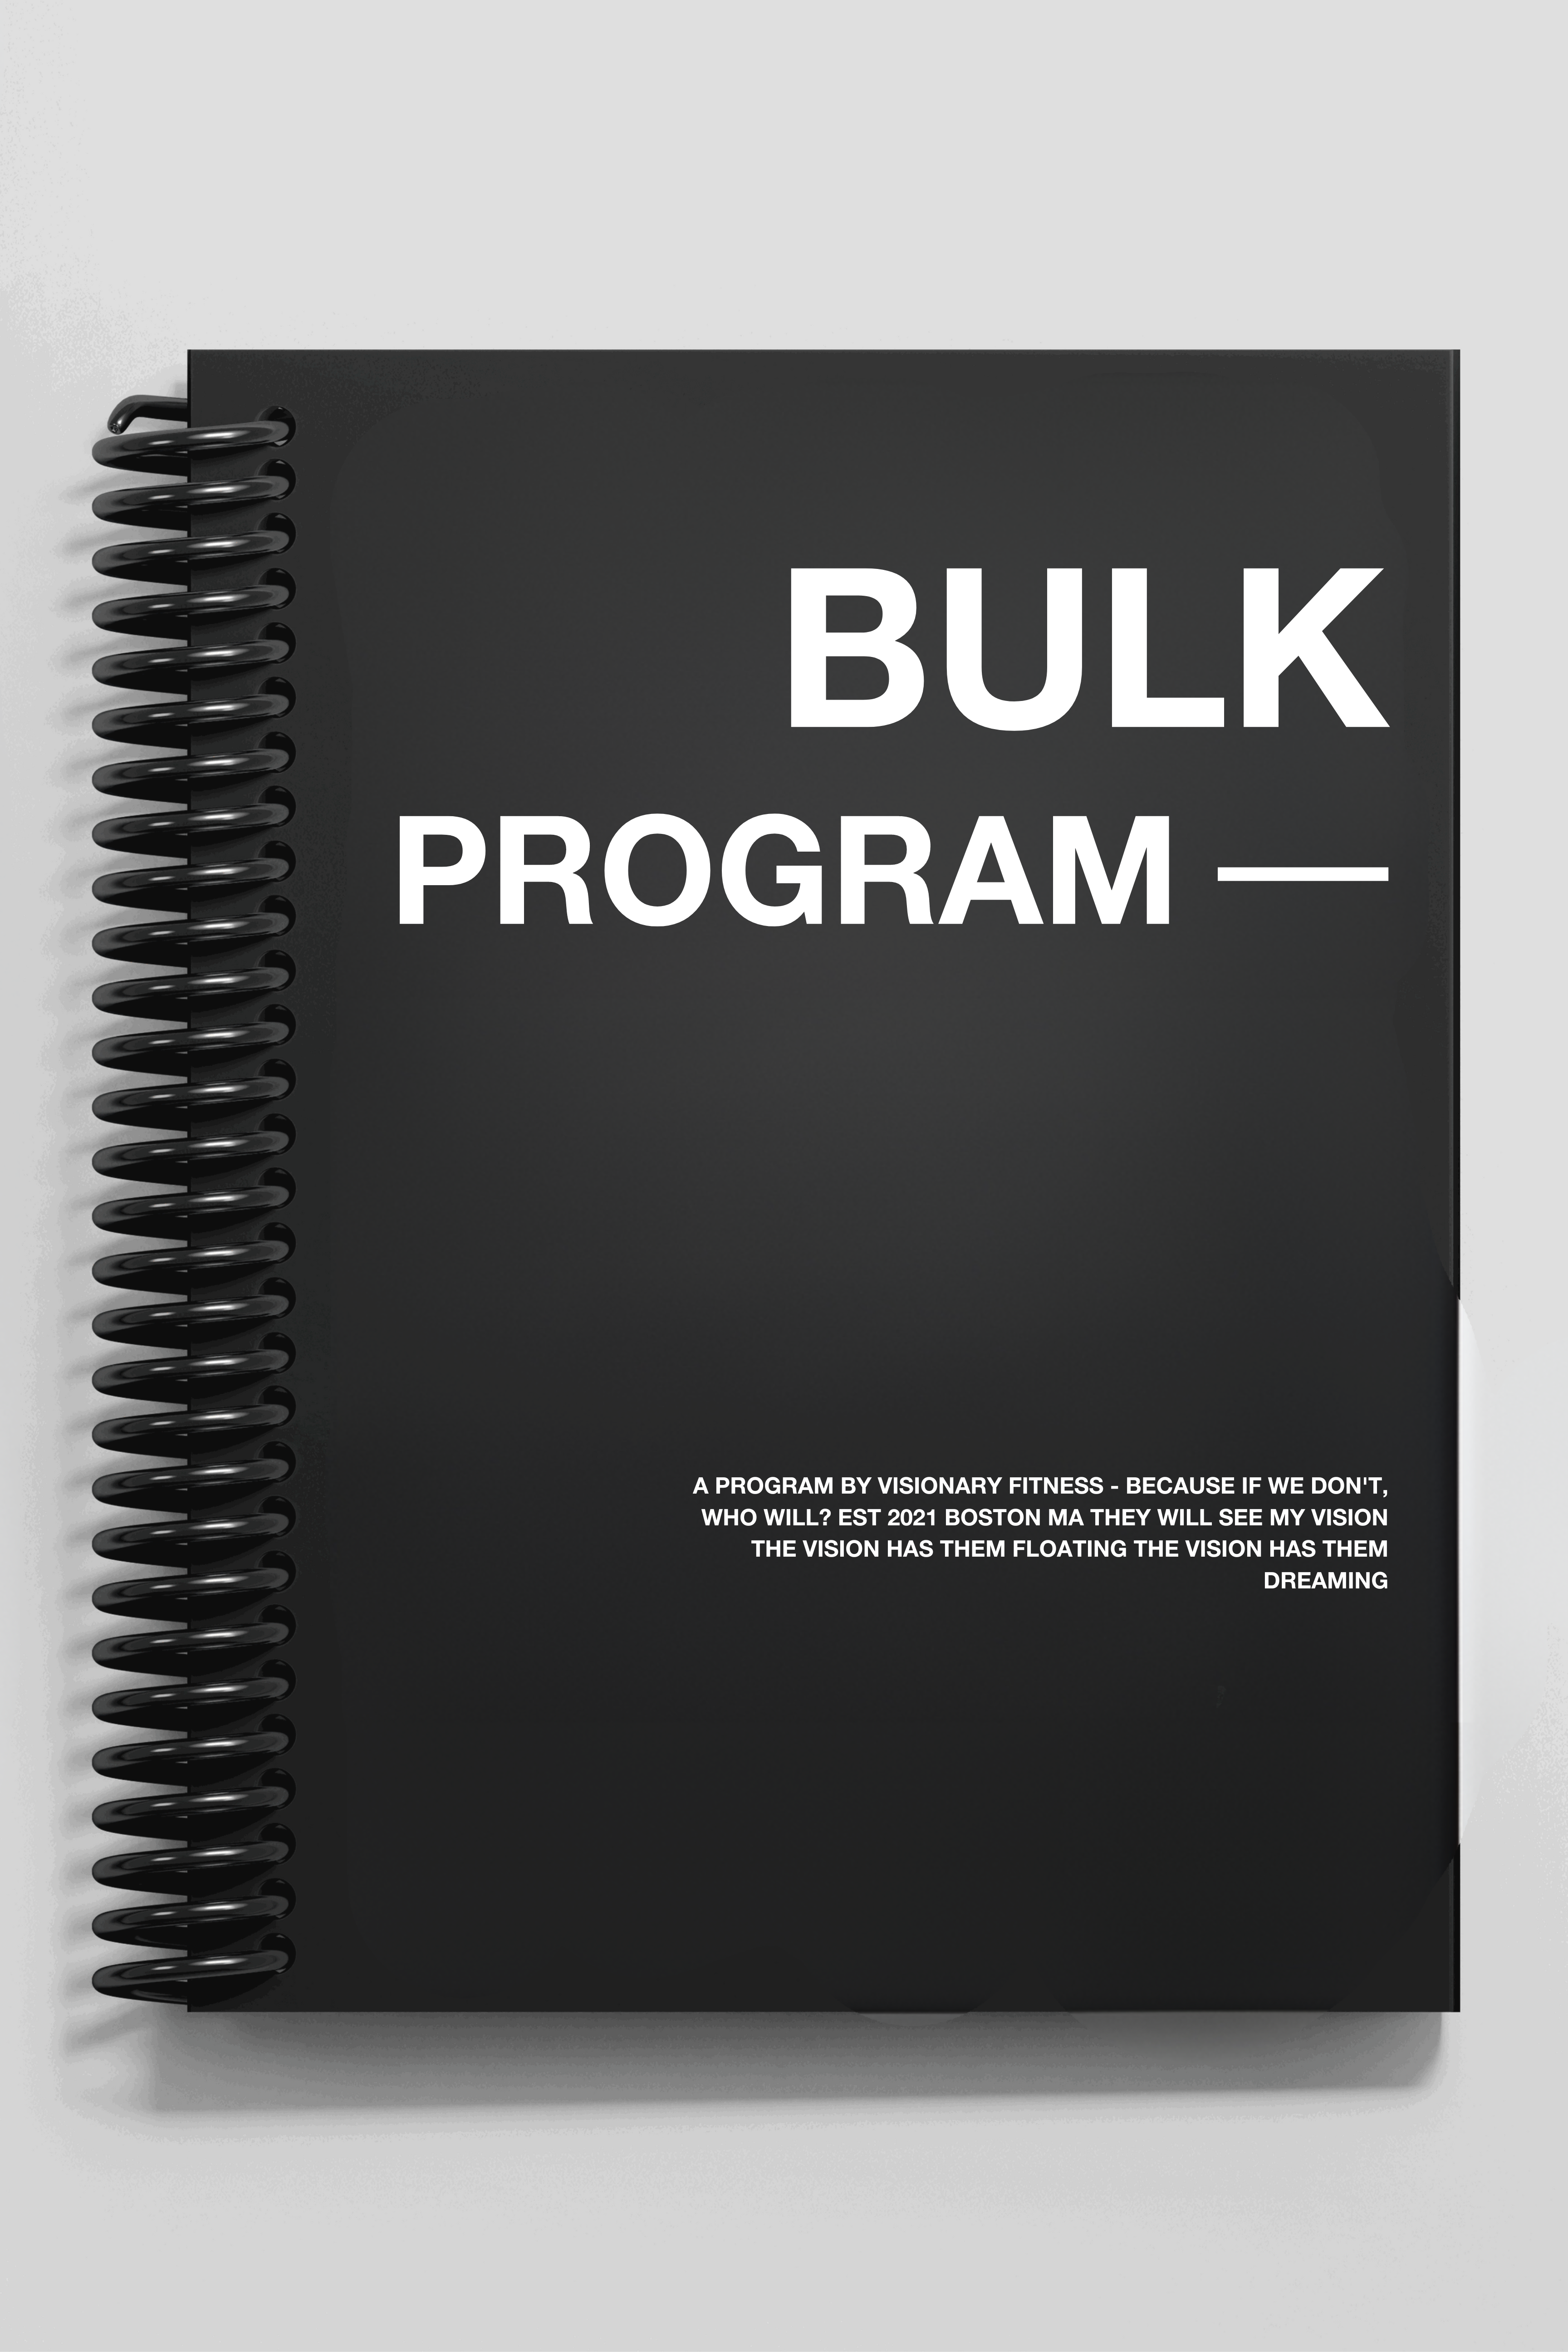 FREE BULK PROGRAM